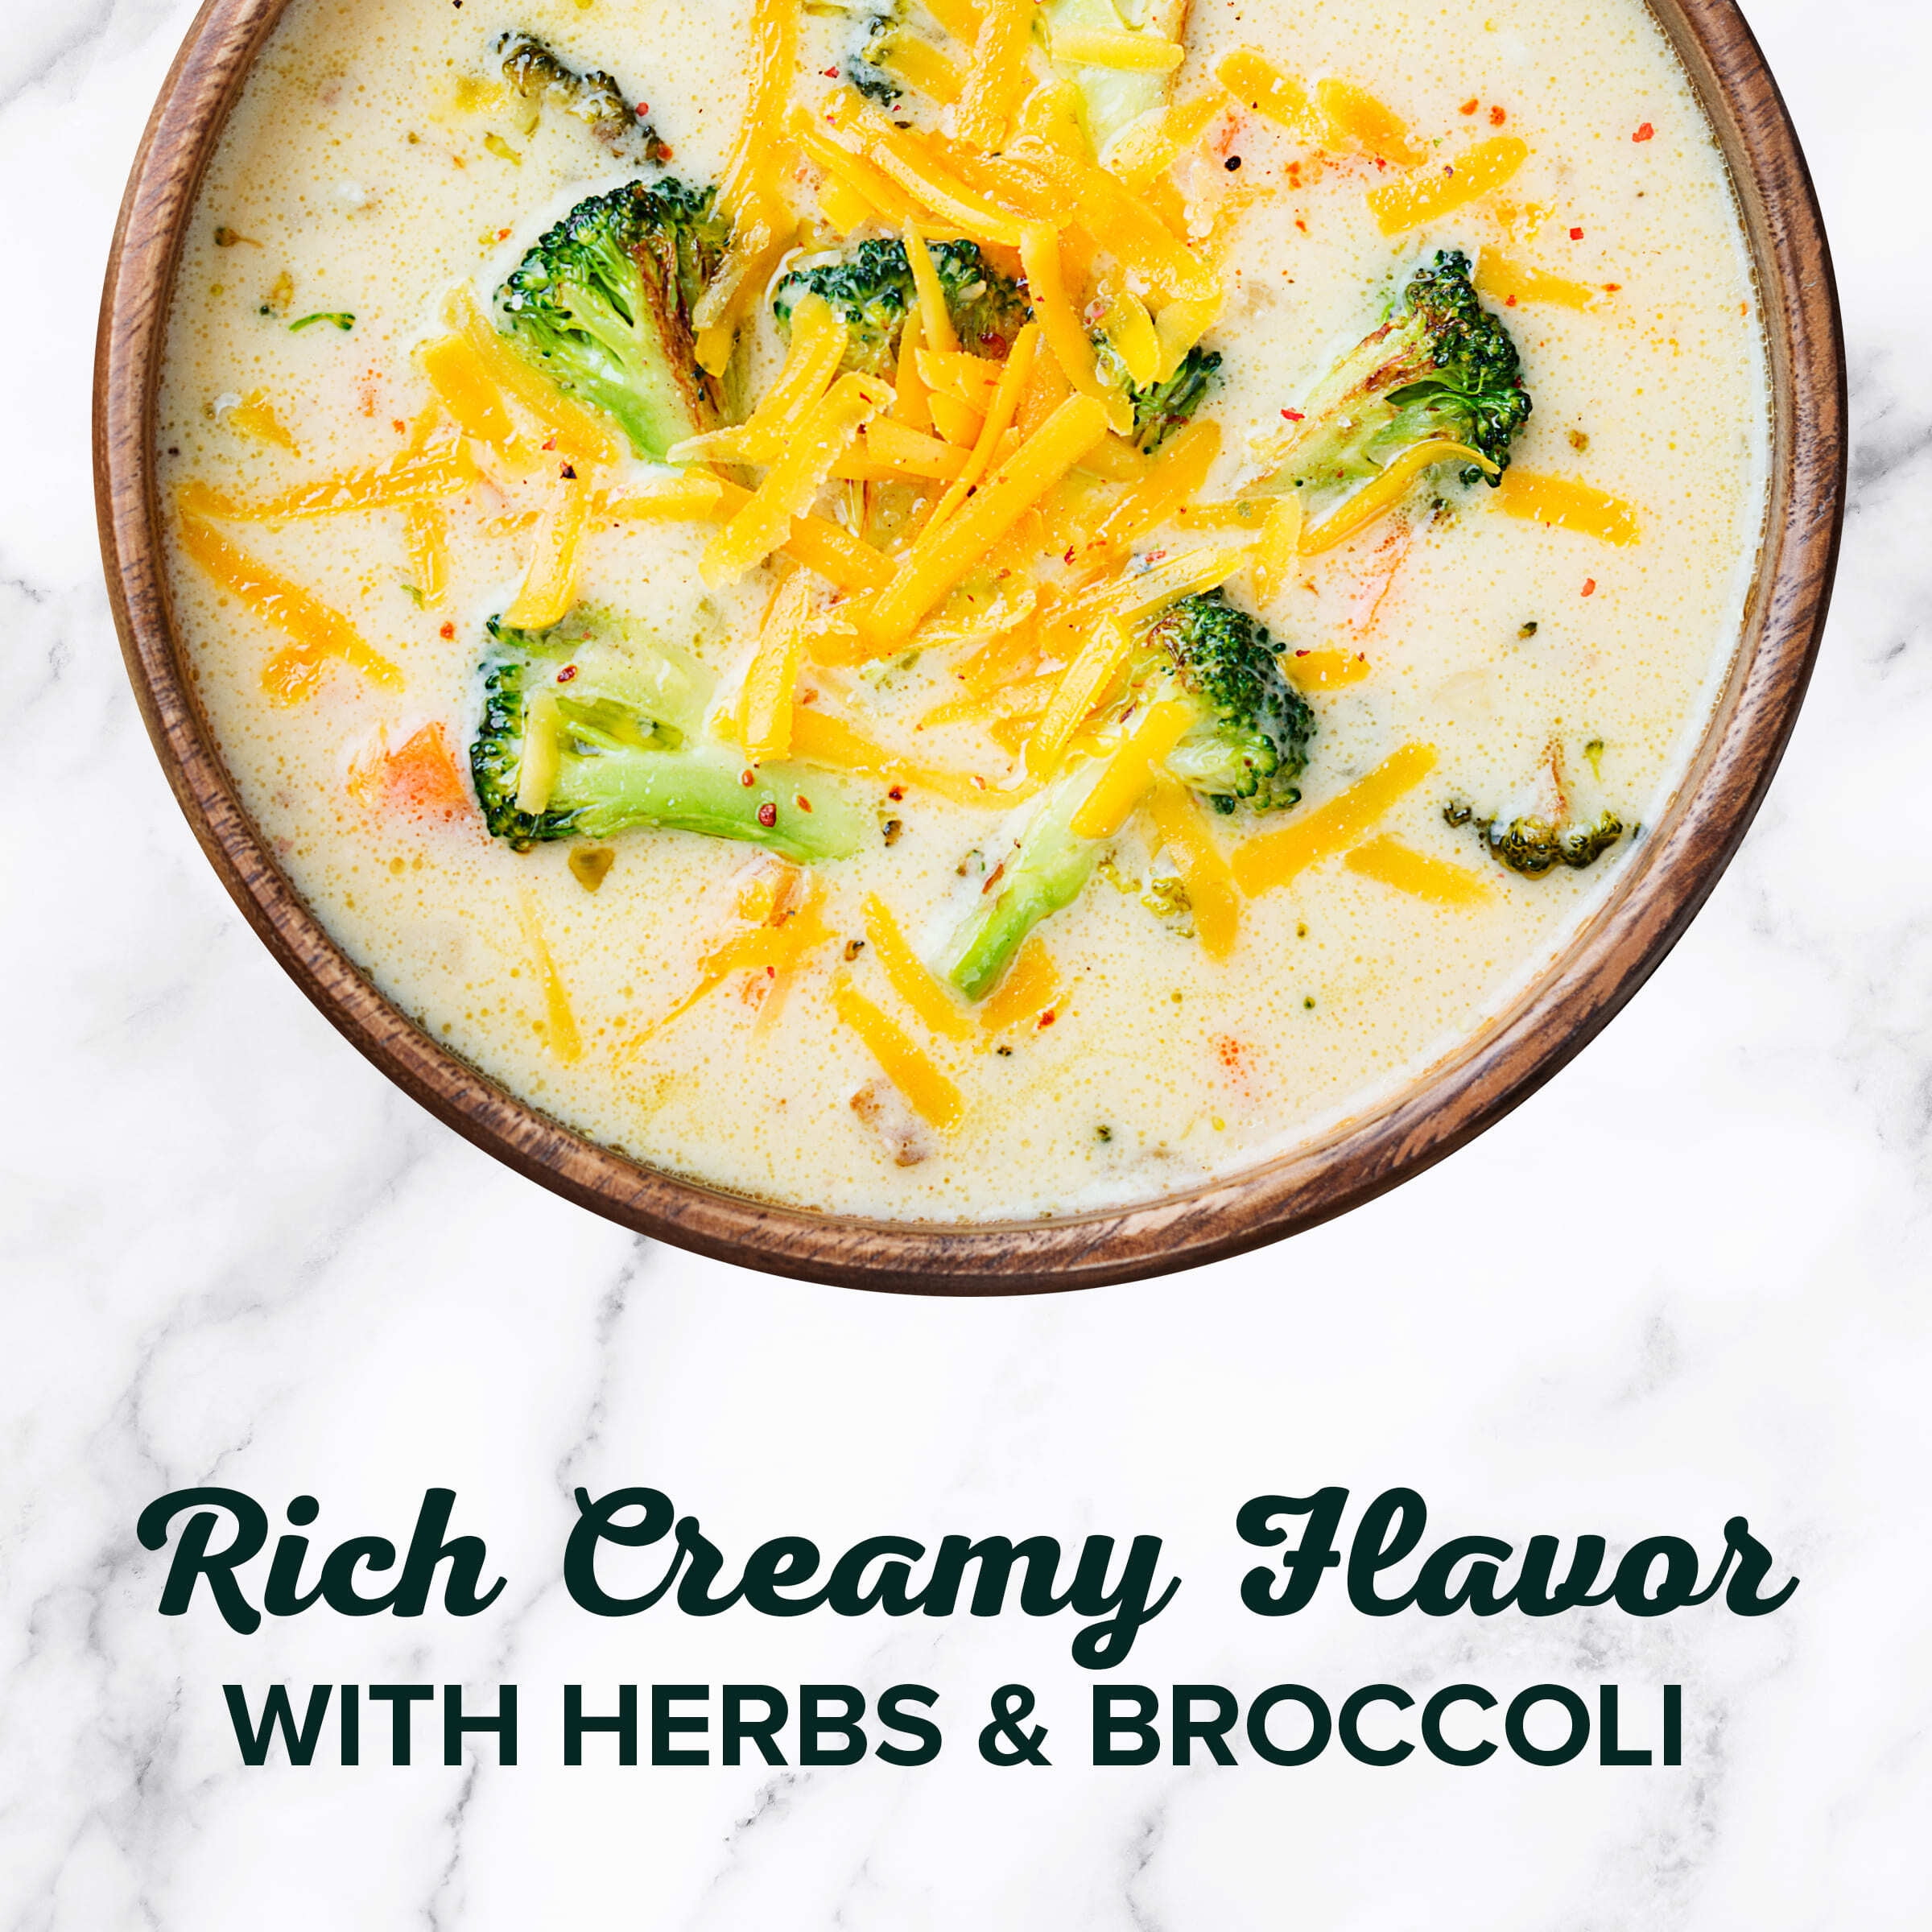 Broccoli Cheddar Soup Seasoning (Pack of 3)